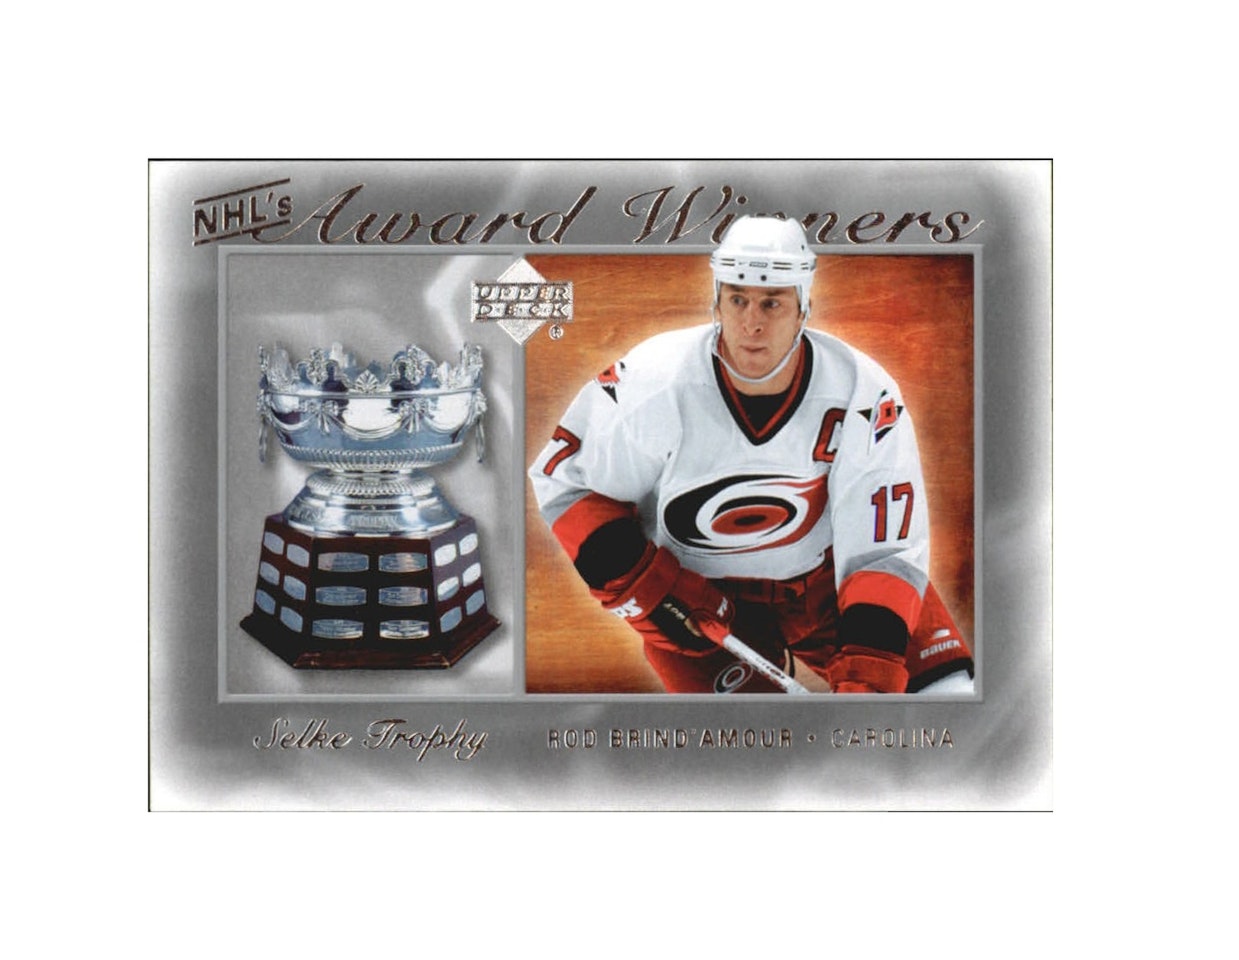 2007-08 Upper Deck NHL Award Winners #AW5 Rod Brind'Amour (15-X87-HURRICANES)